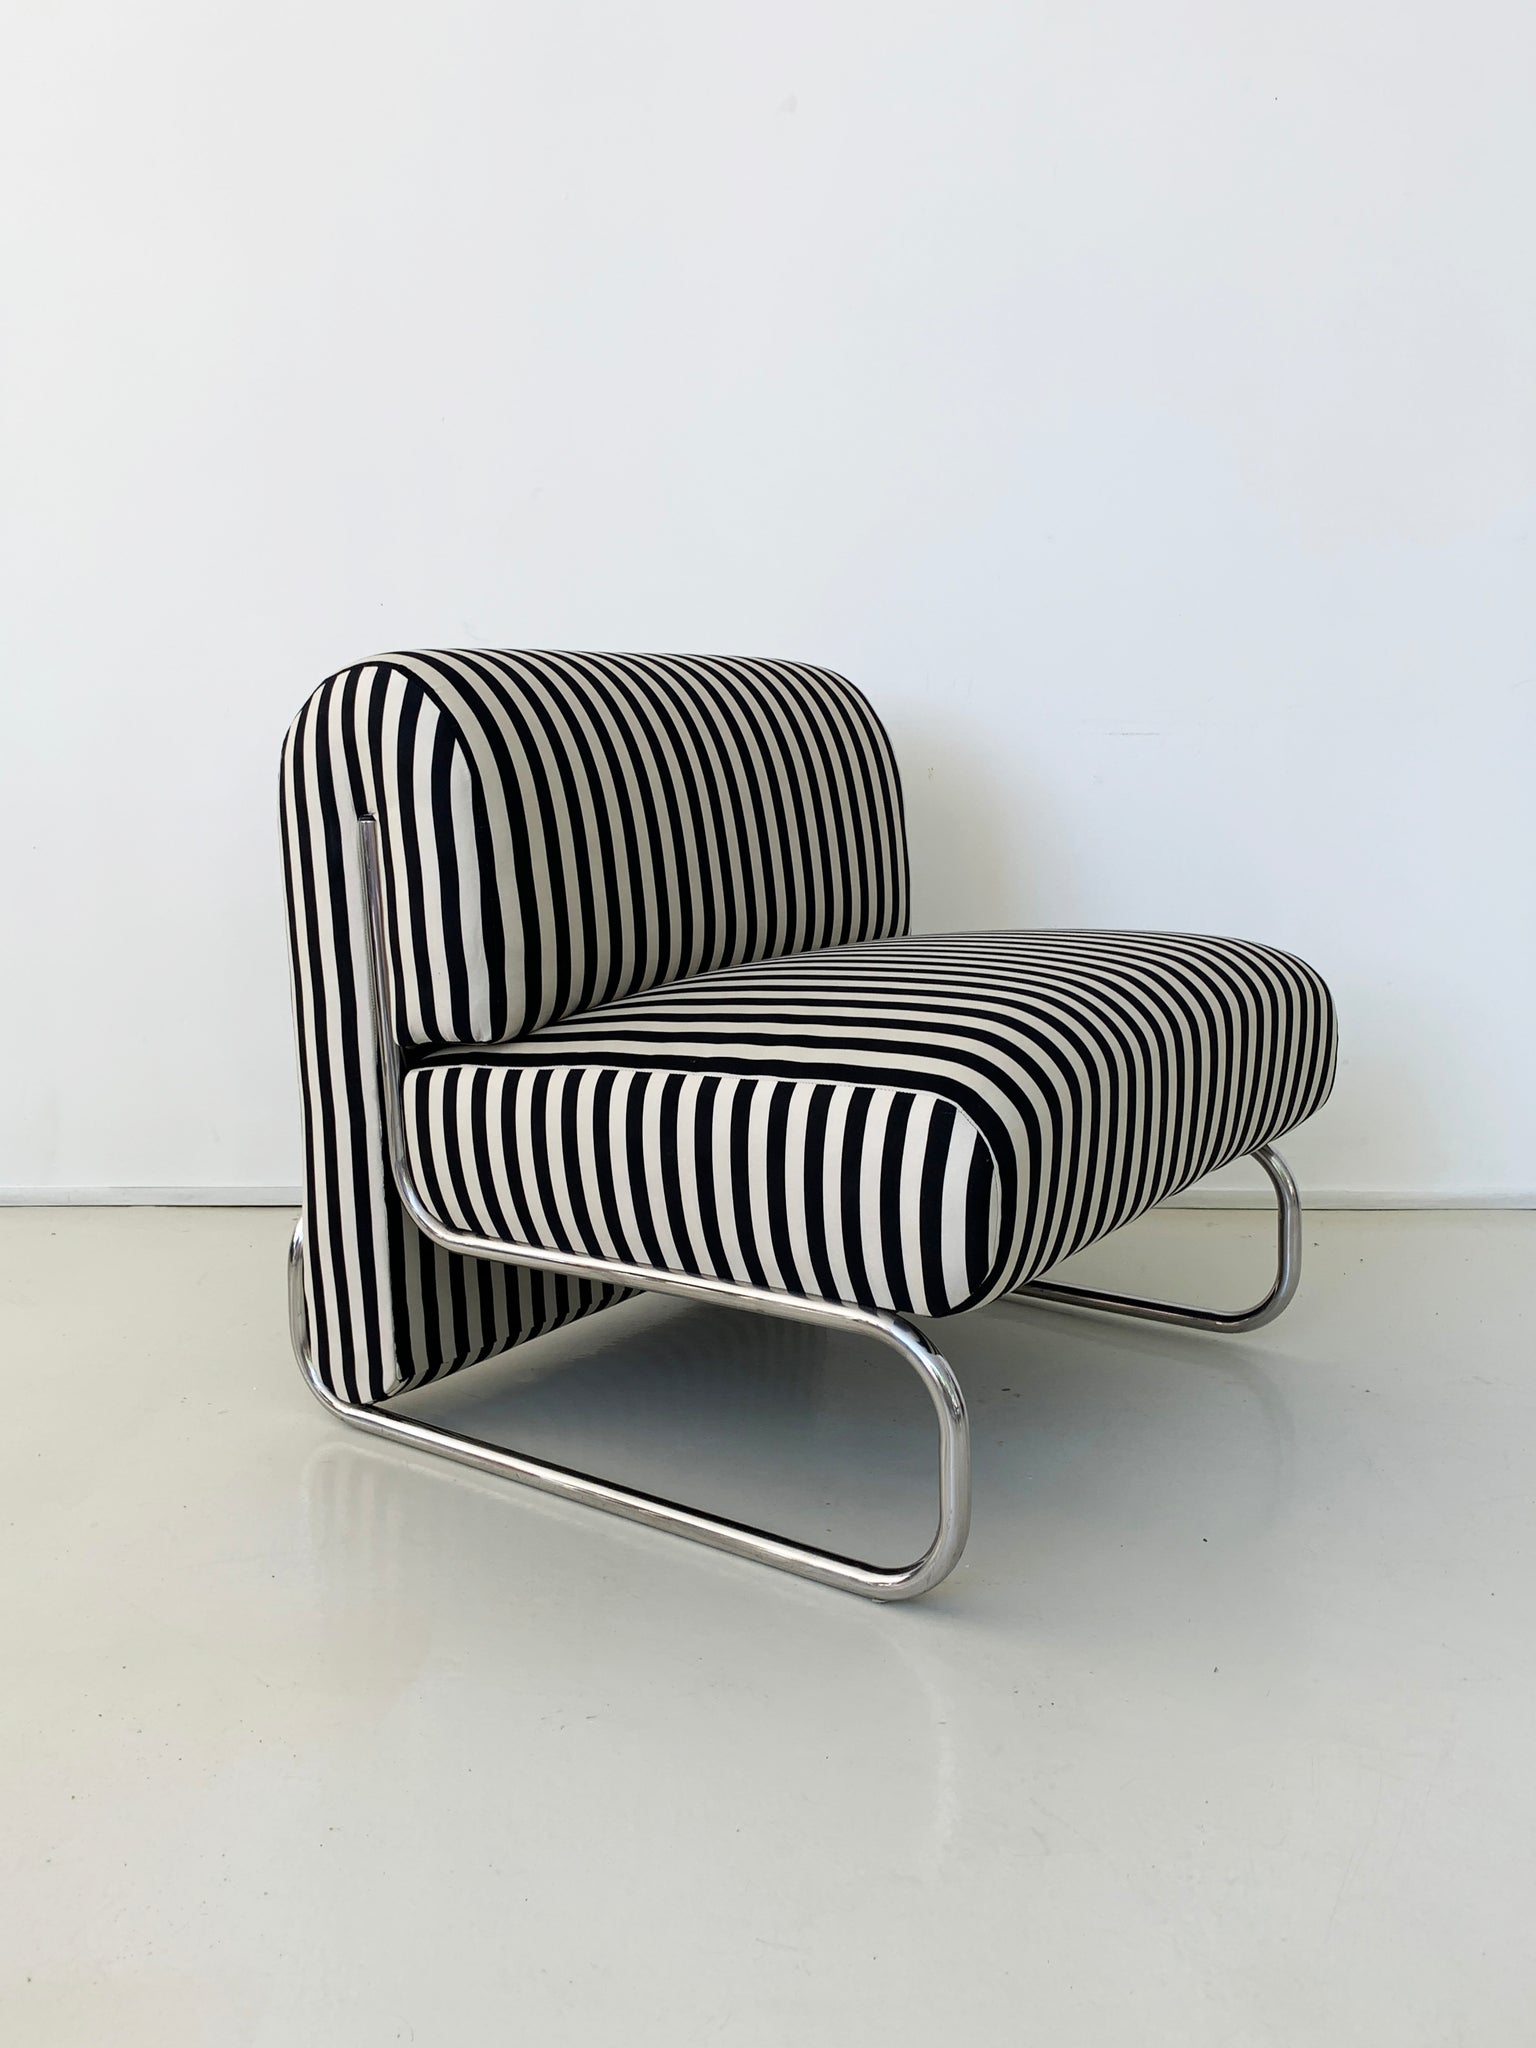 1970s Striped Edward Axel Roffman Tubular Chrome Chair